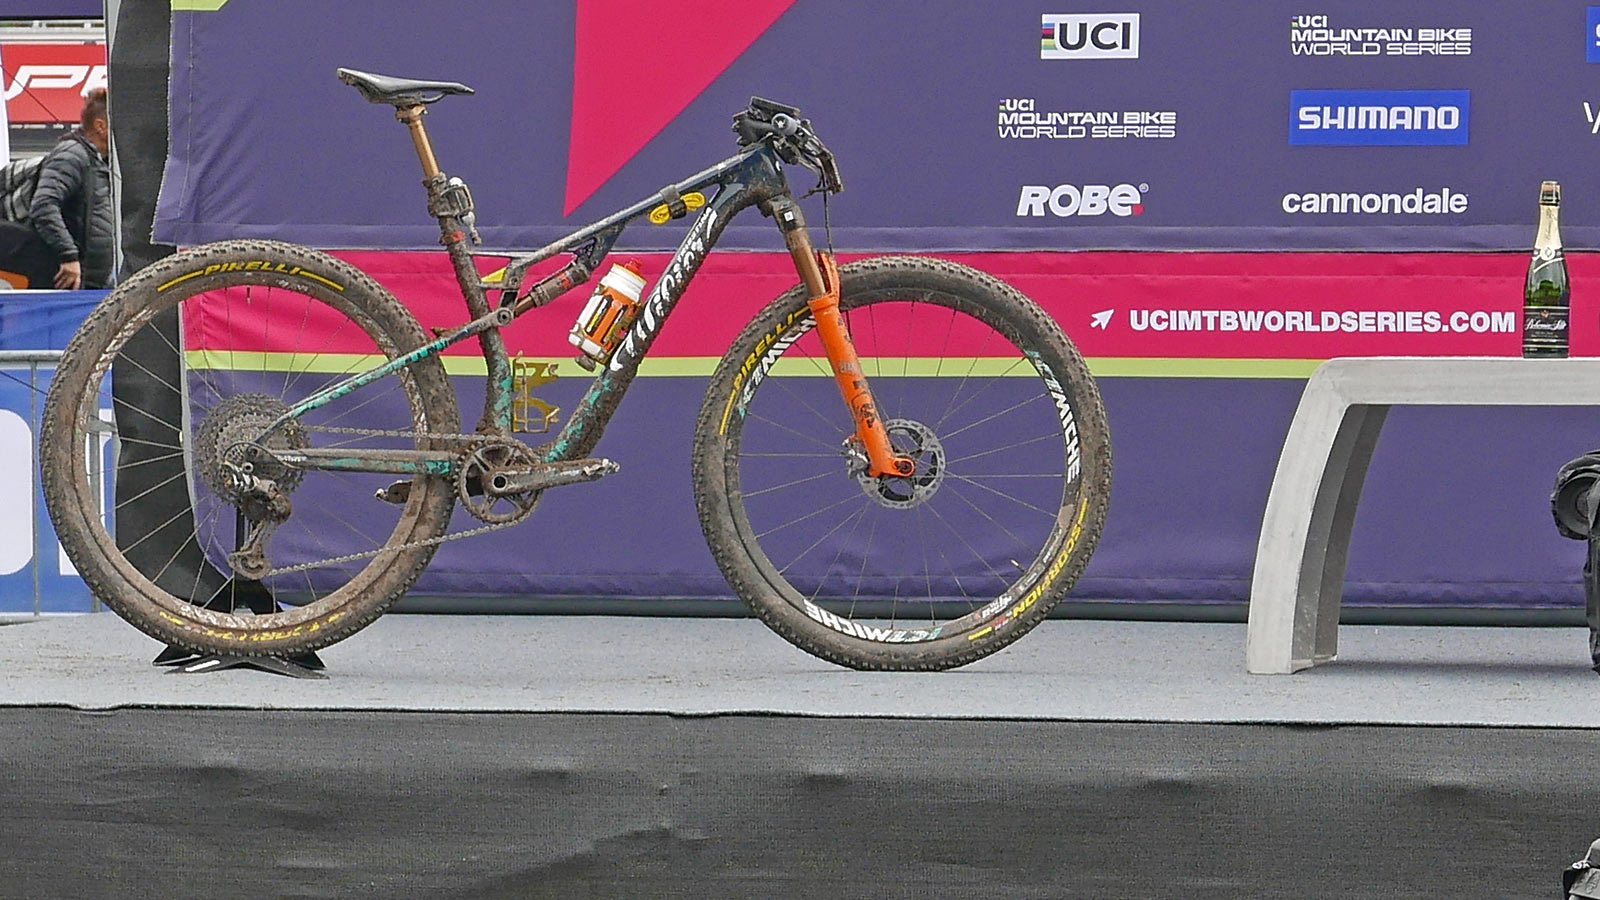 Wilier Urta Max SLR lightweight 120mm carbon XC race mountain bike, UCI fastest Marathon bike